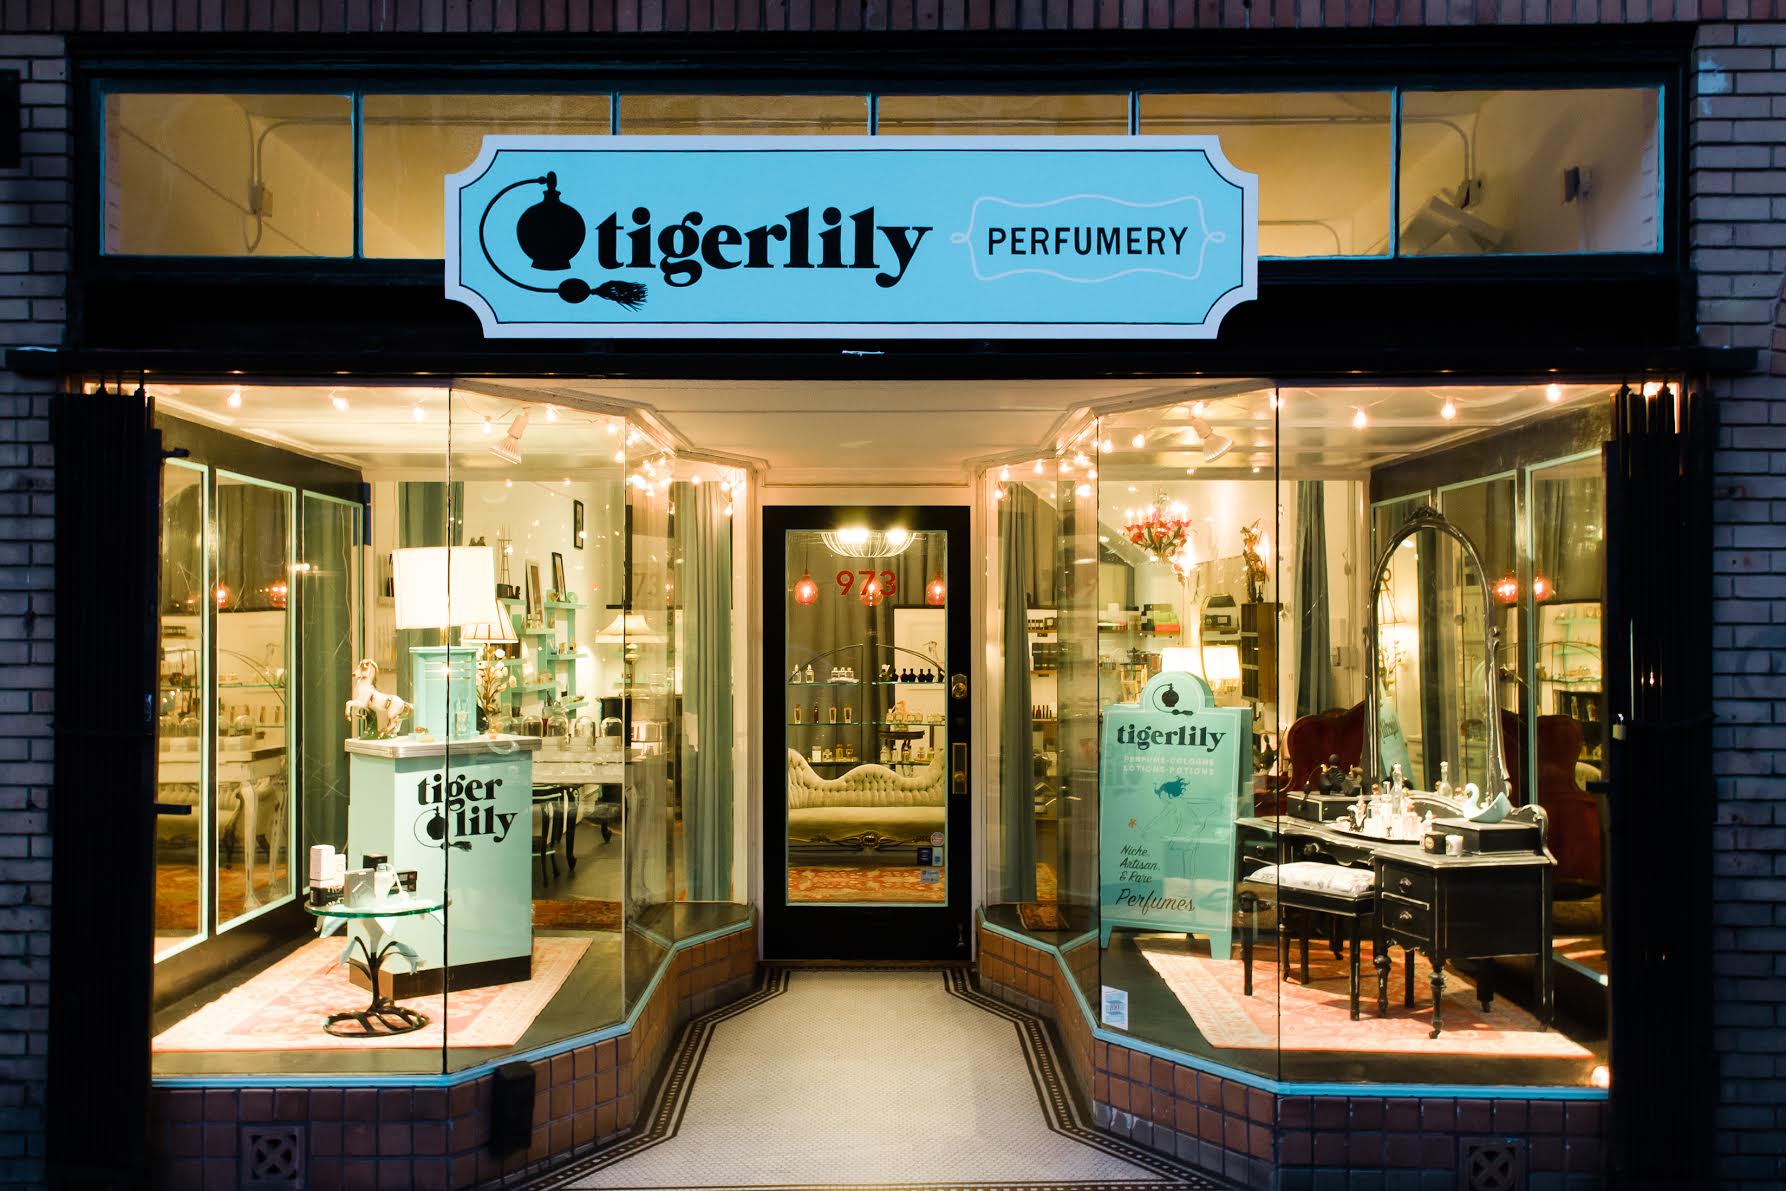 Exterior Store of Tigerlily; Image Courtesy of Tigerilly Perfumery 